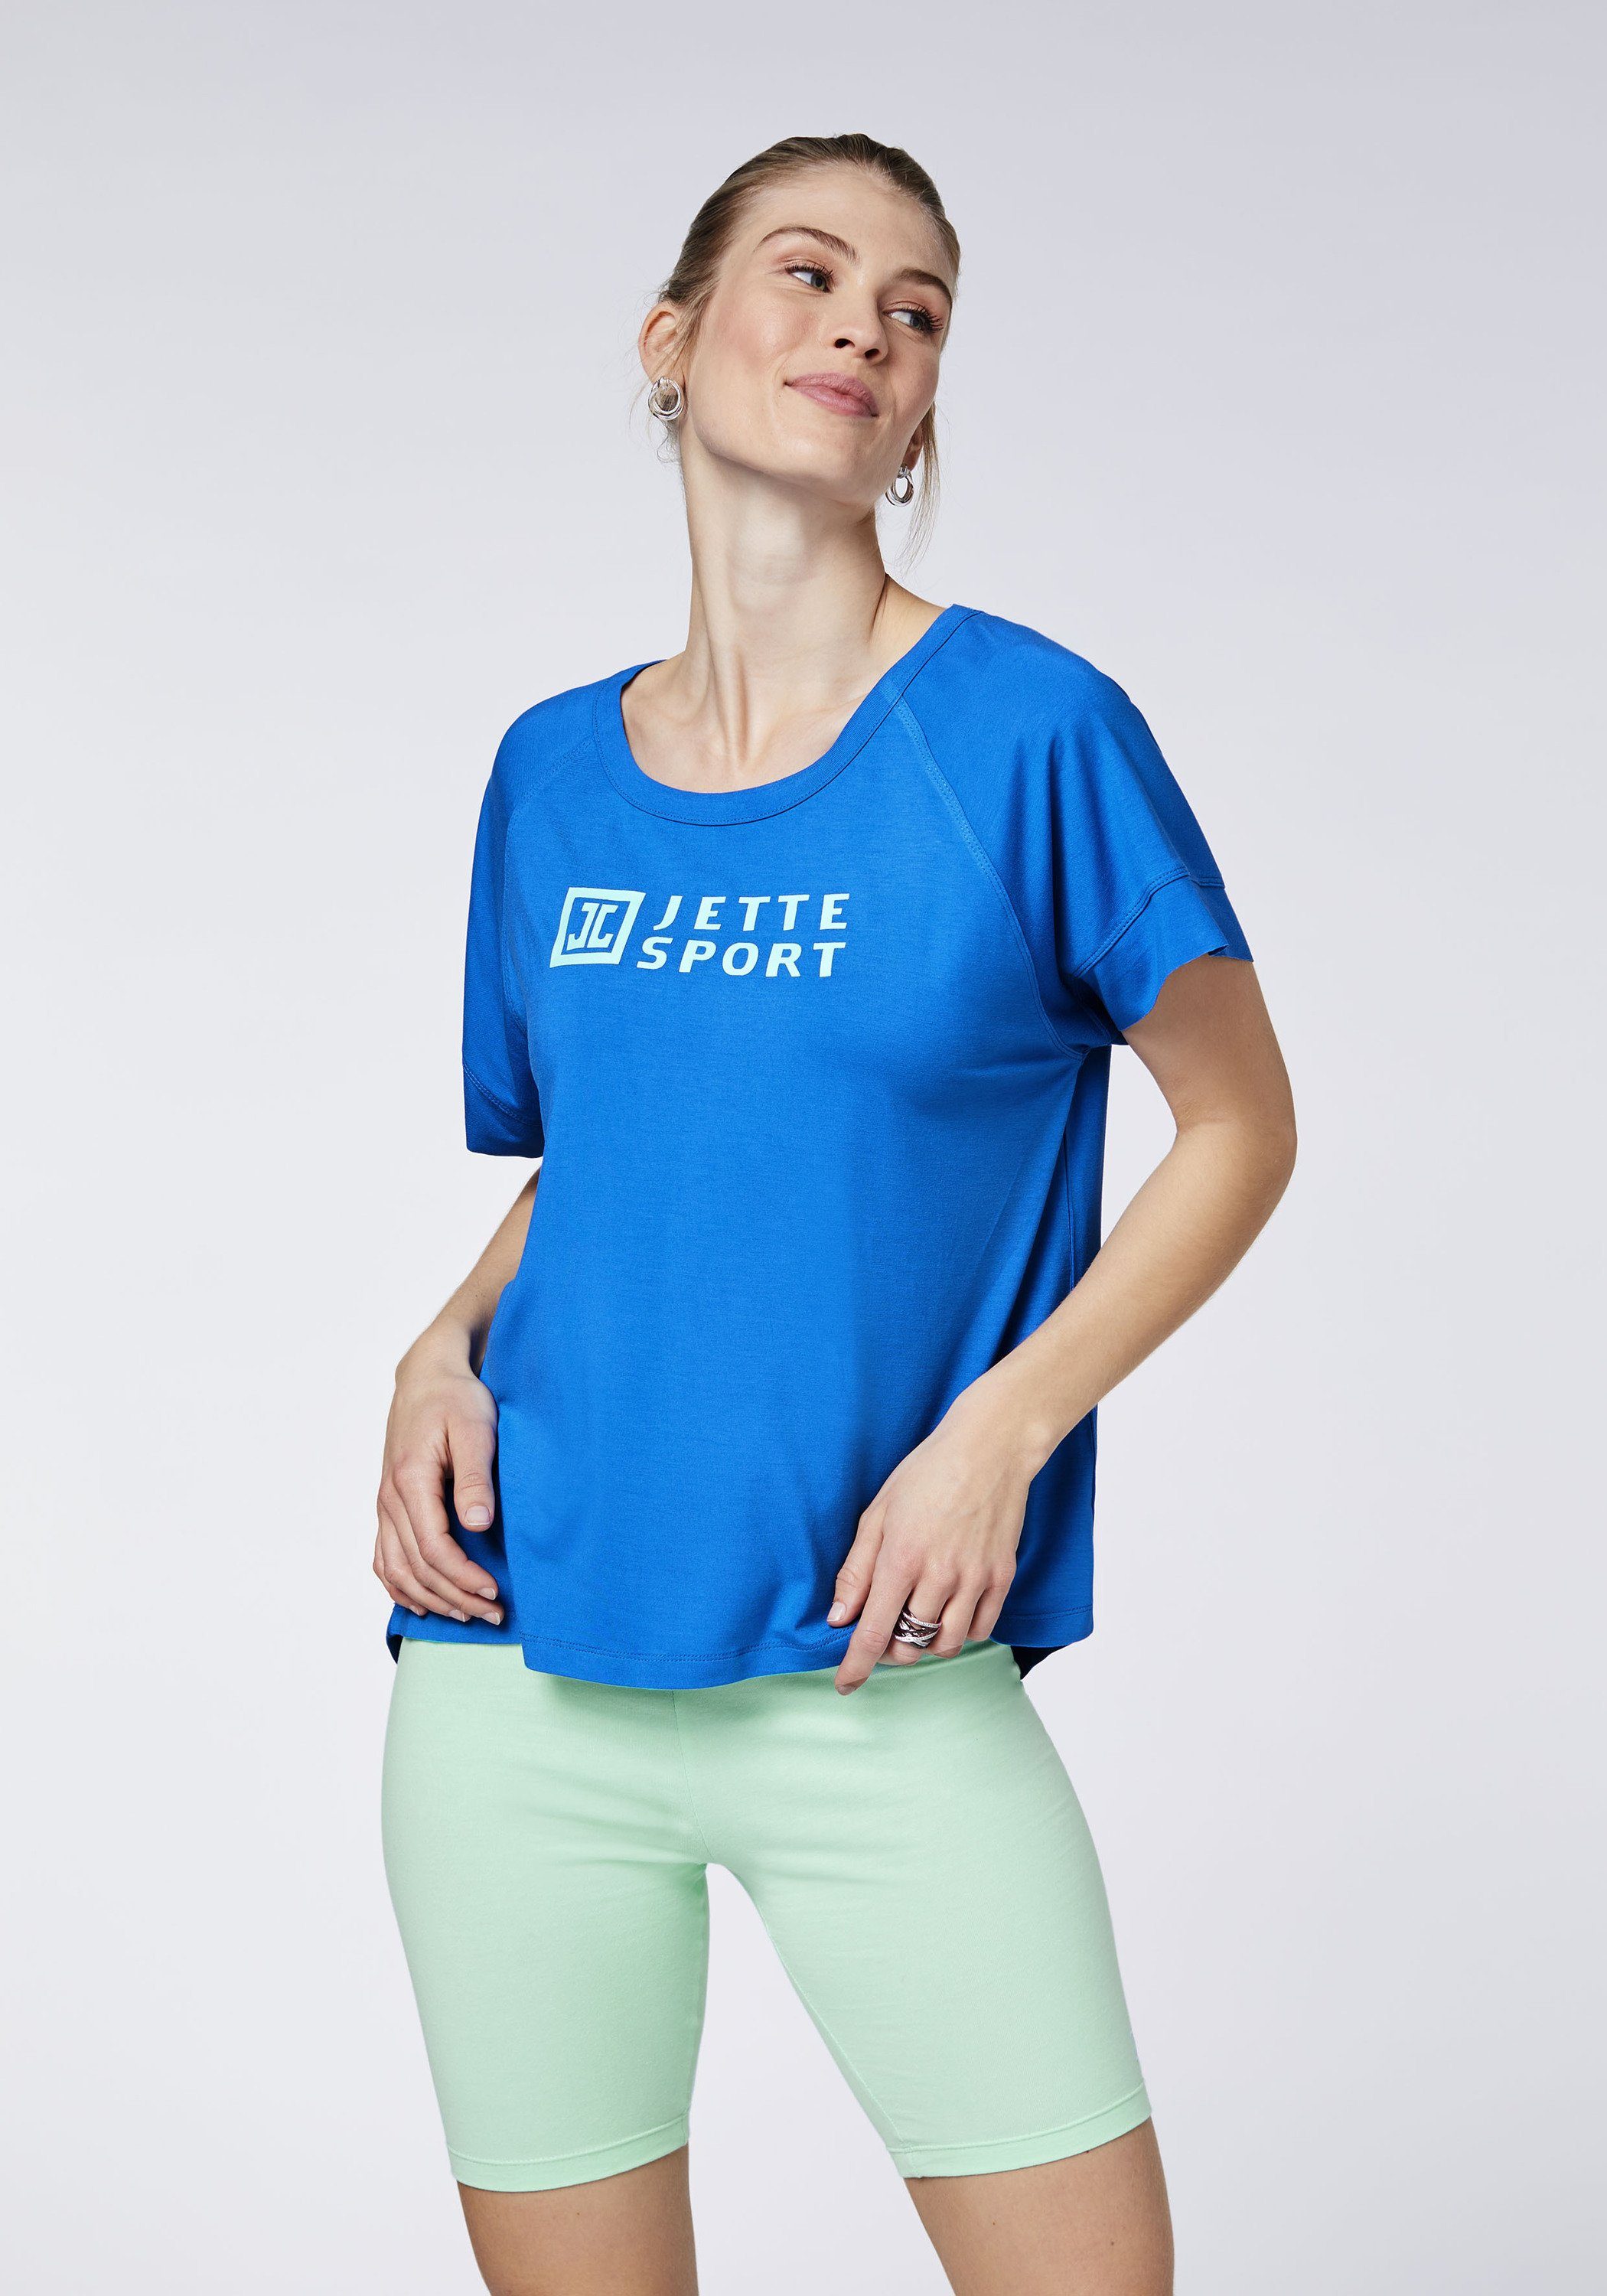 Print-Shirt JETTE und Comfort-Fit Princess boxy 19-4150 SPORT Shape Blue